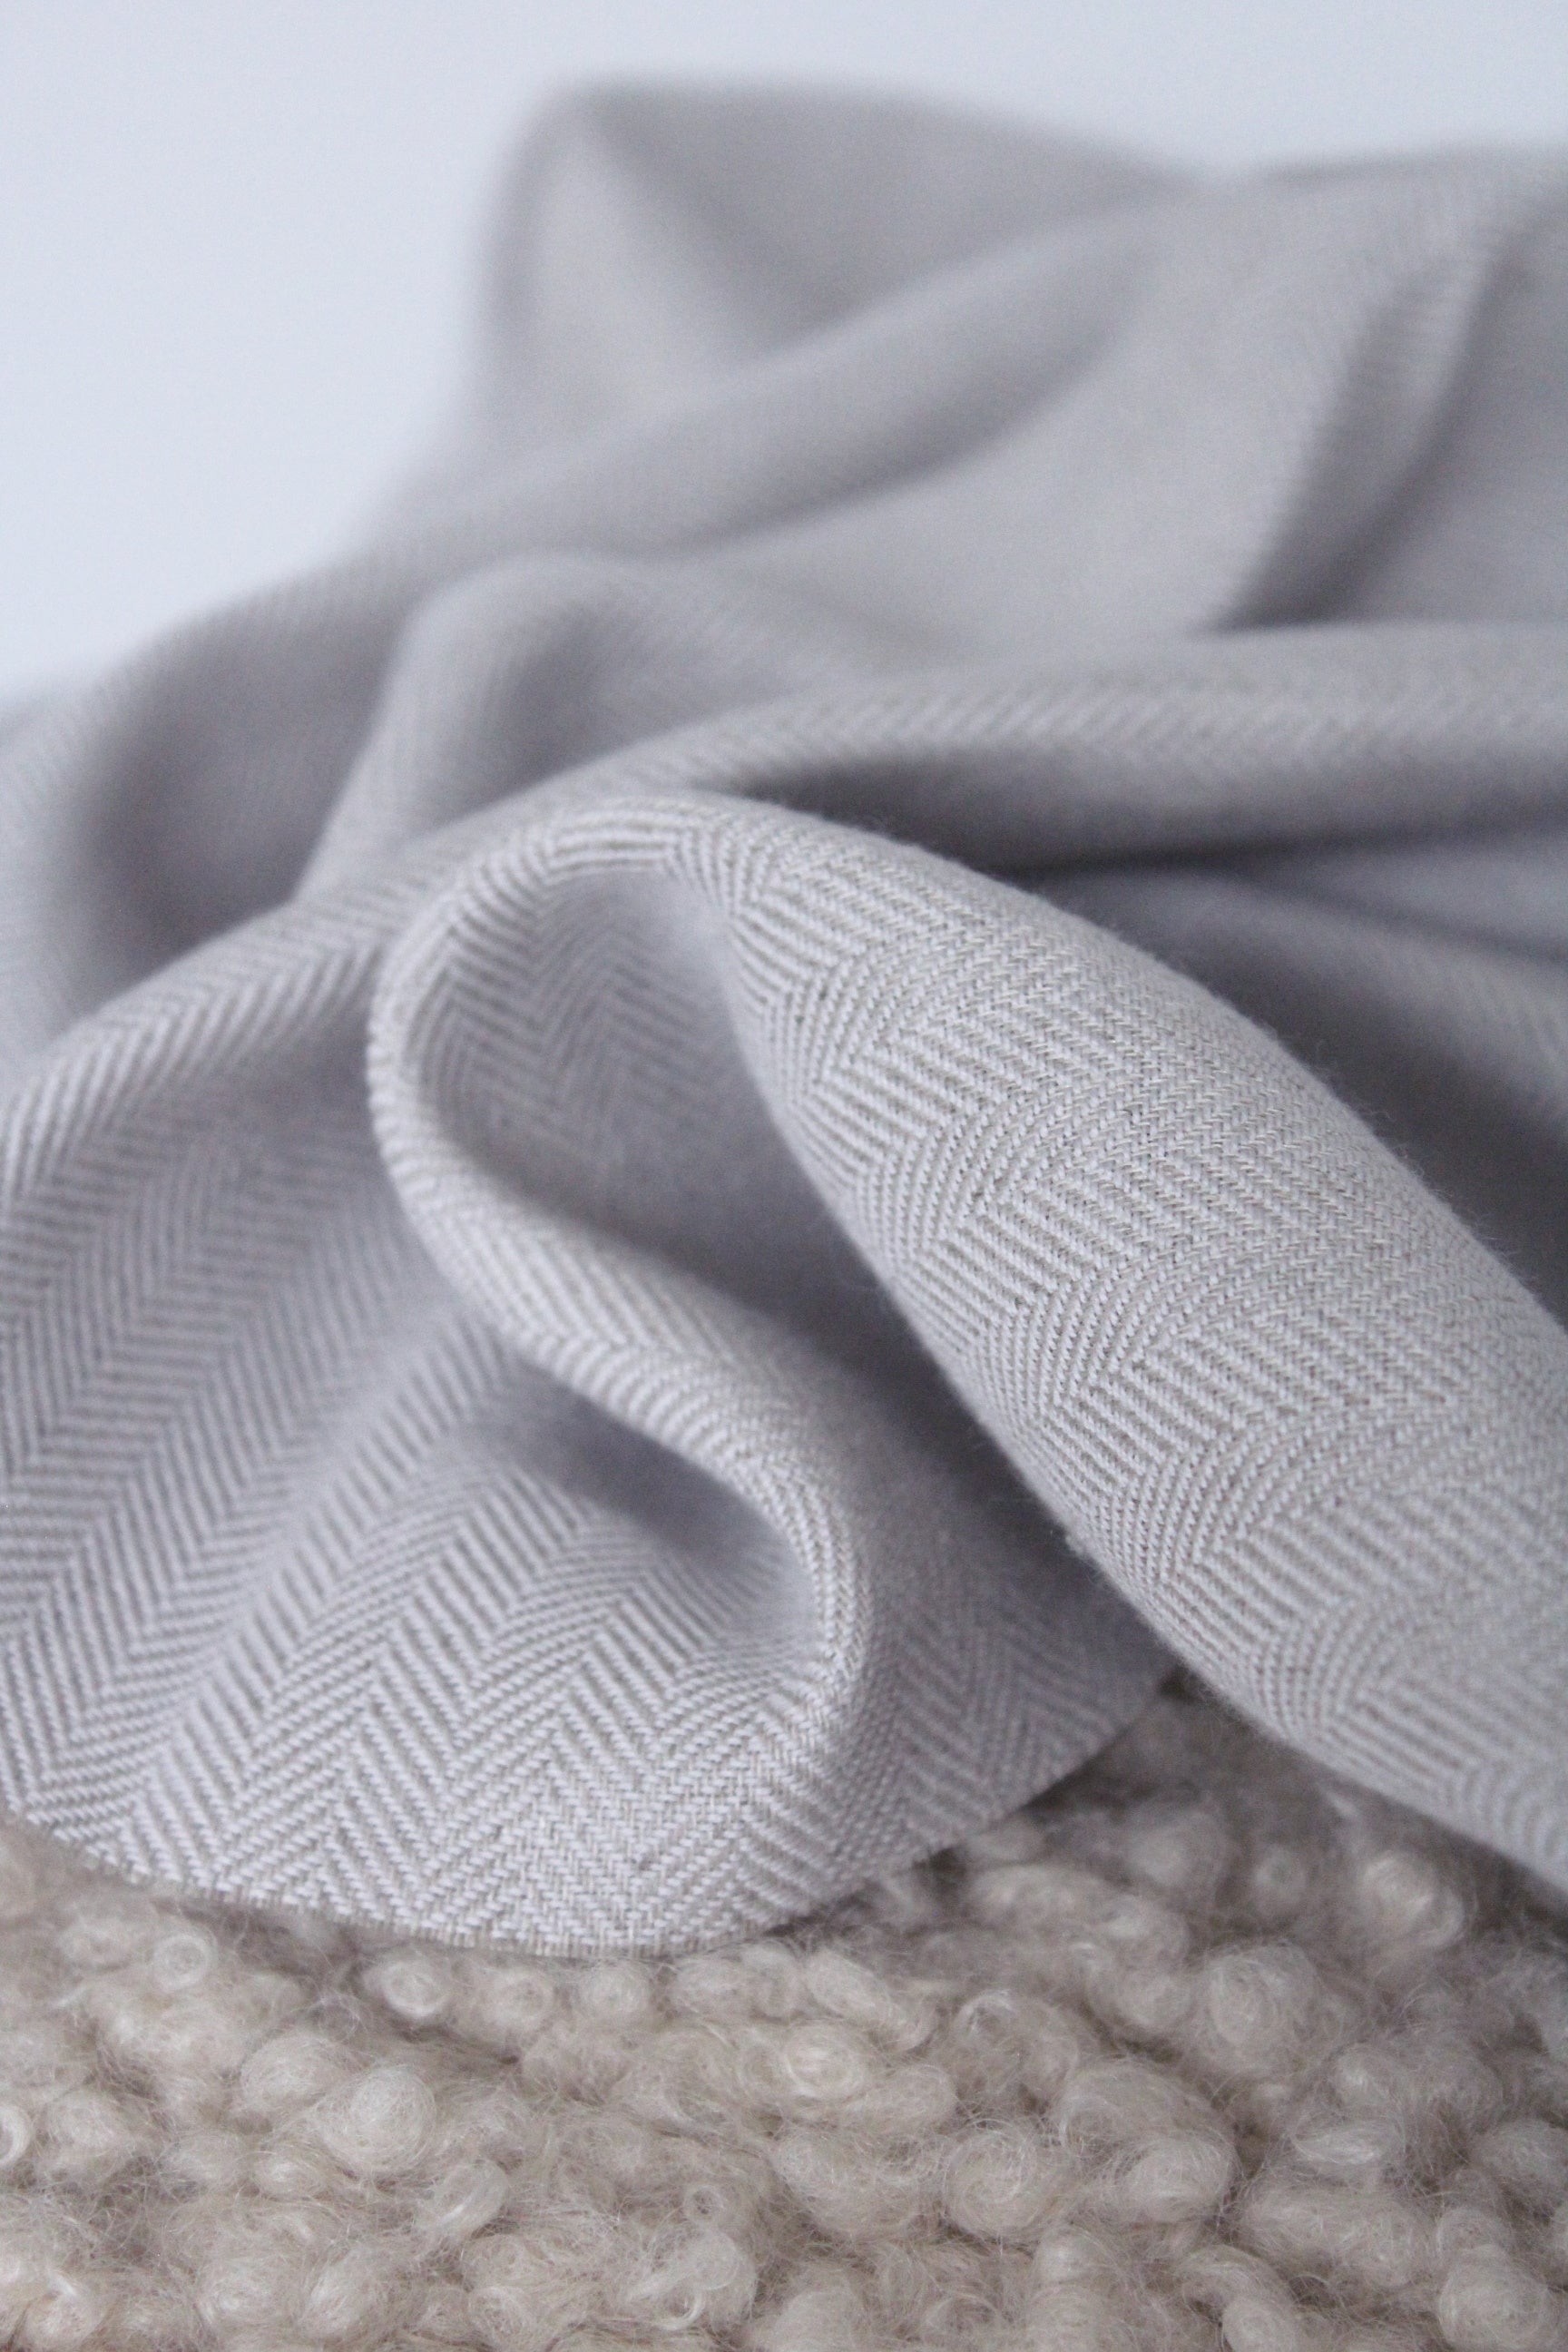 pure natural flax linen, warm grey with purple undertone, herringbone weave texture, medium weight fabric